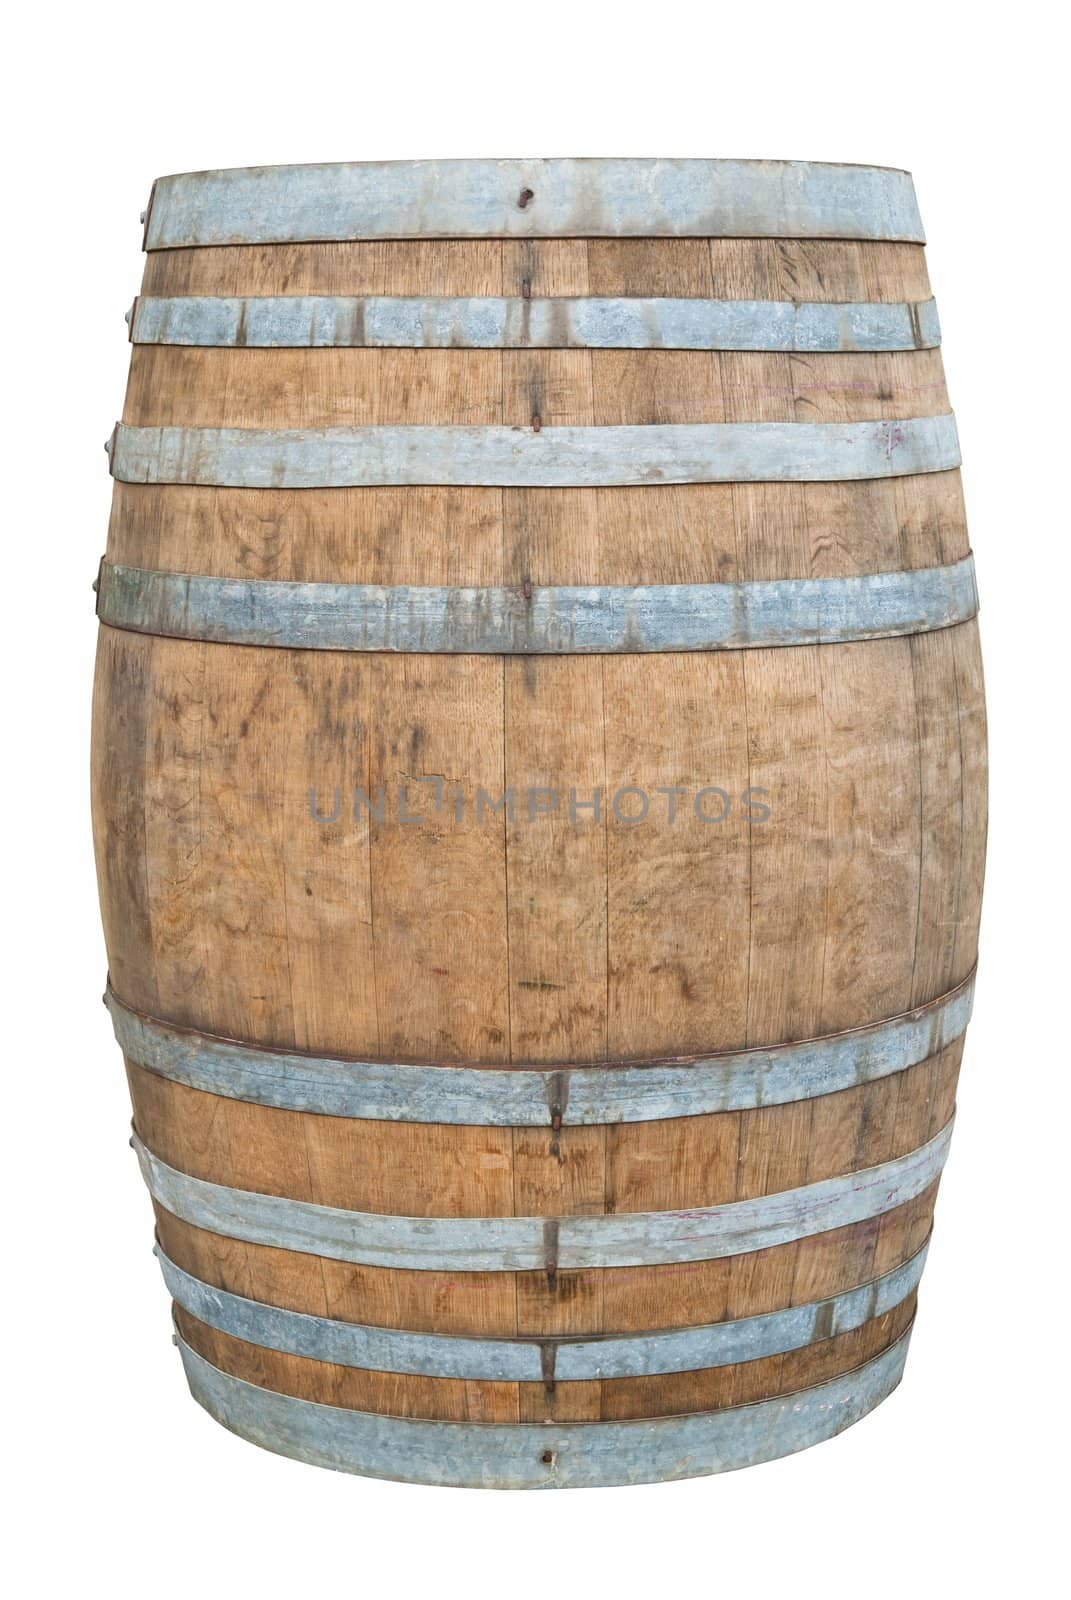 Big old wine barrel, isolated on white background